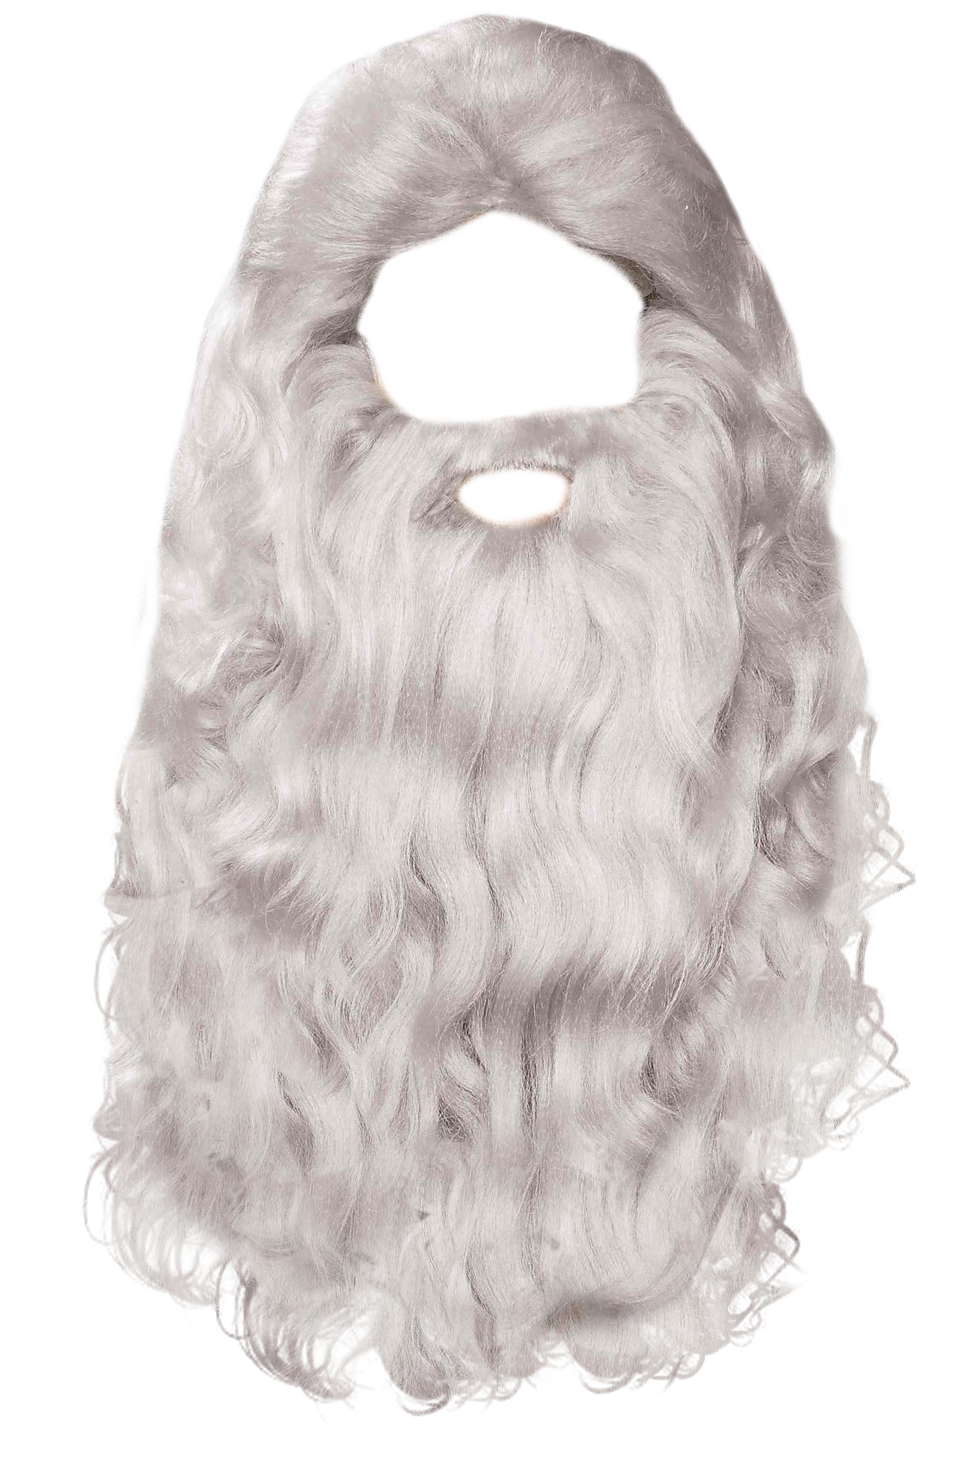 Santa Claus Beard Free PNG